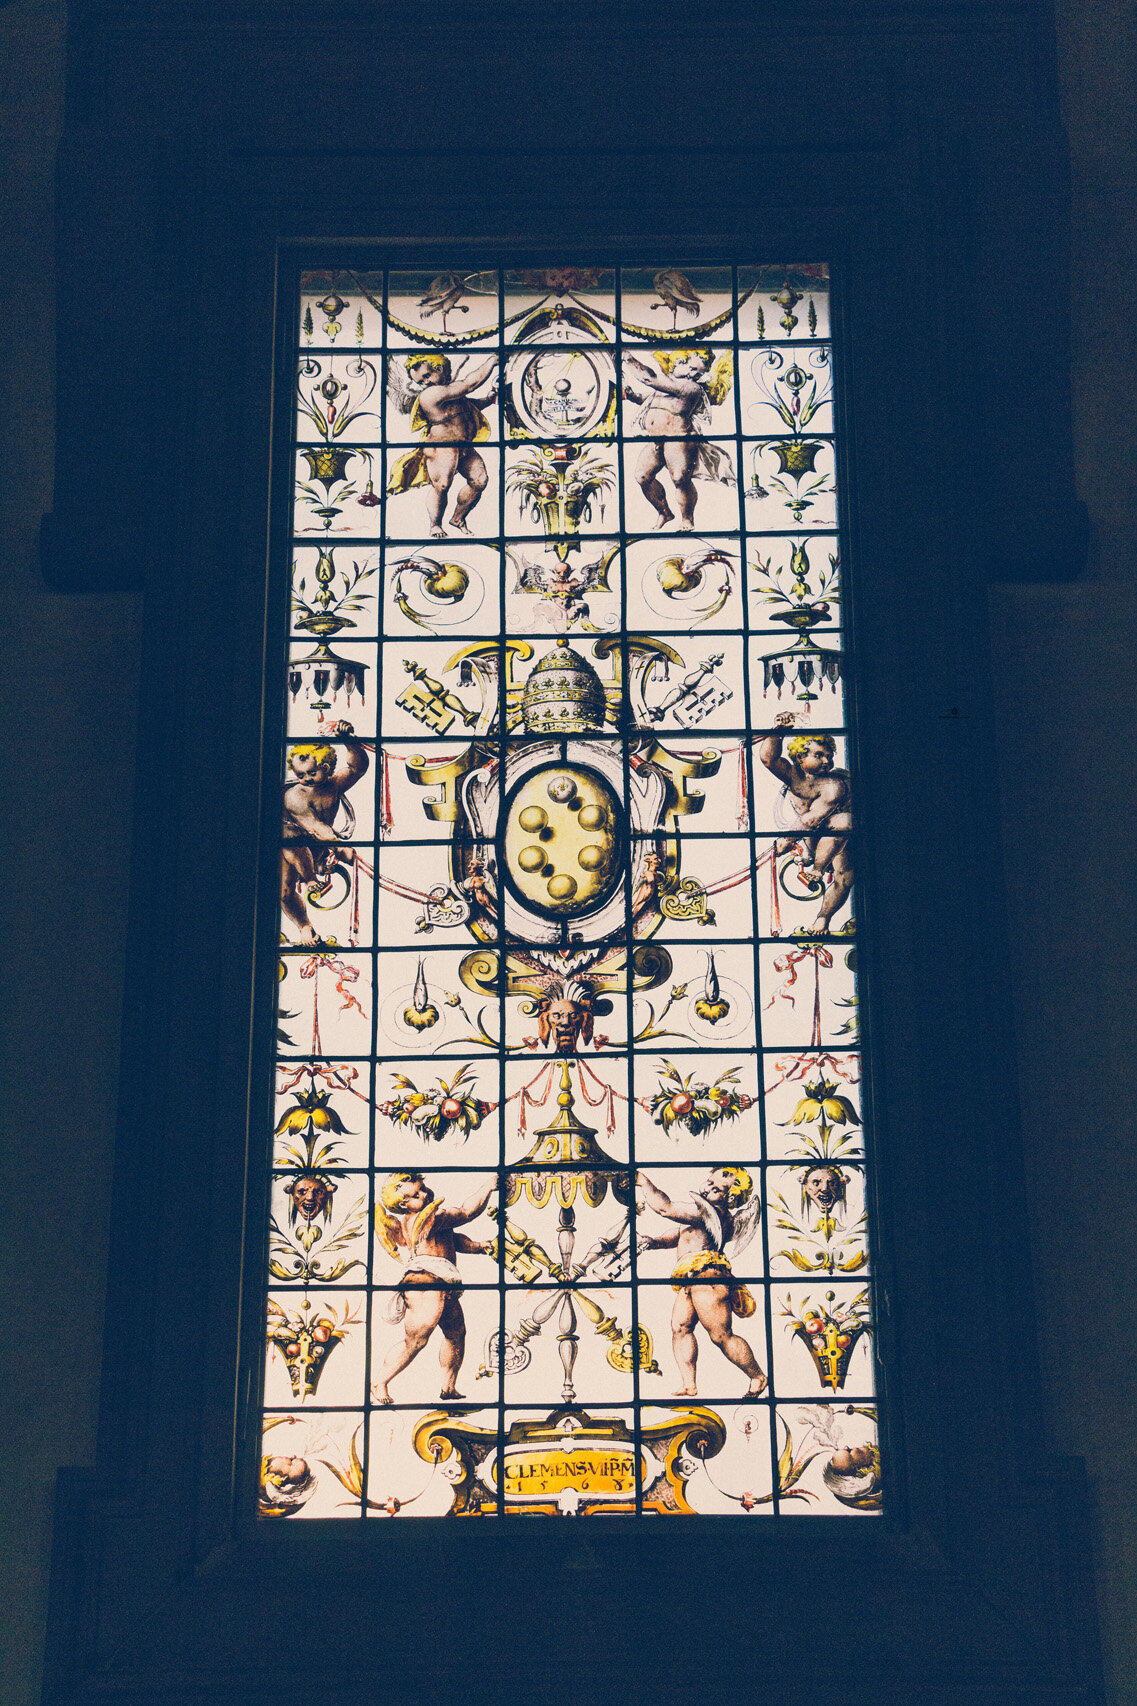 Biblioteca Laurenziana, stained glass windows